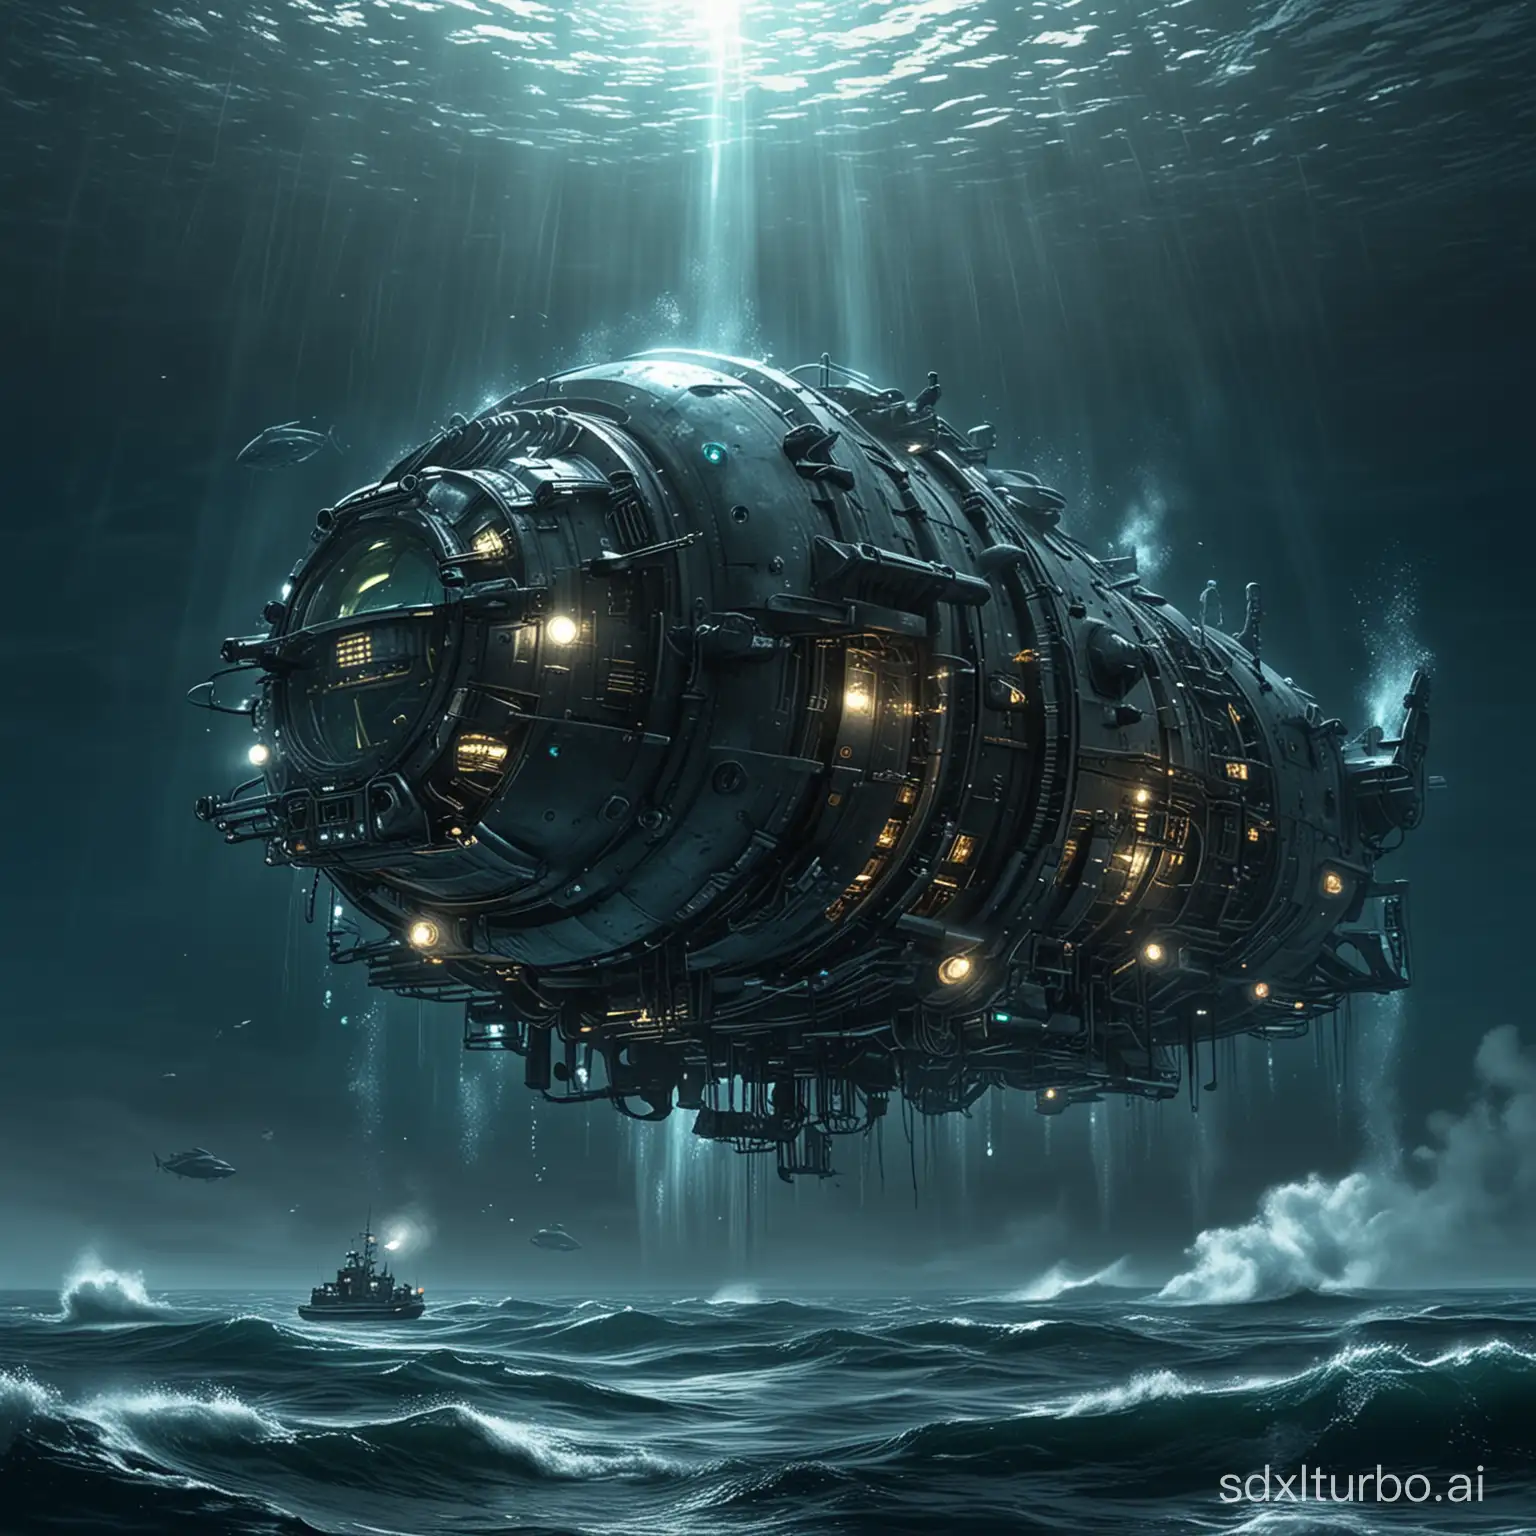 Deep sea science fiction future